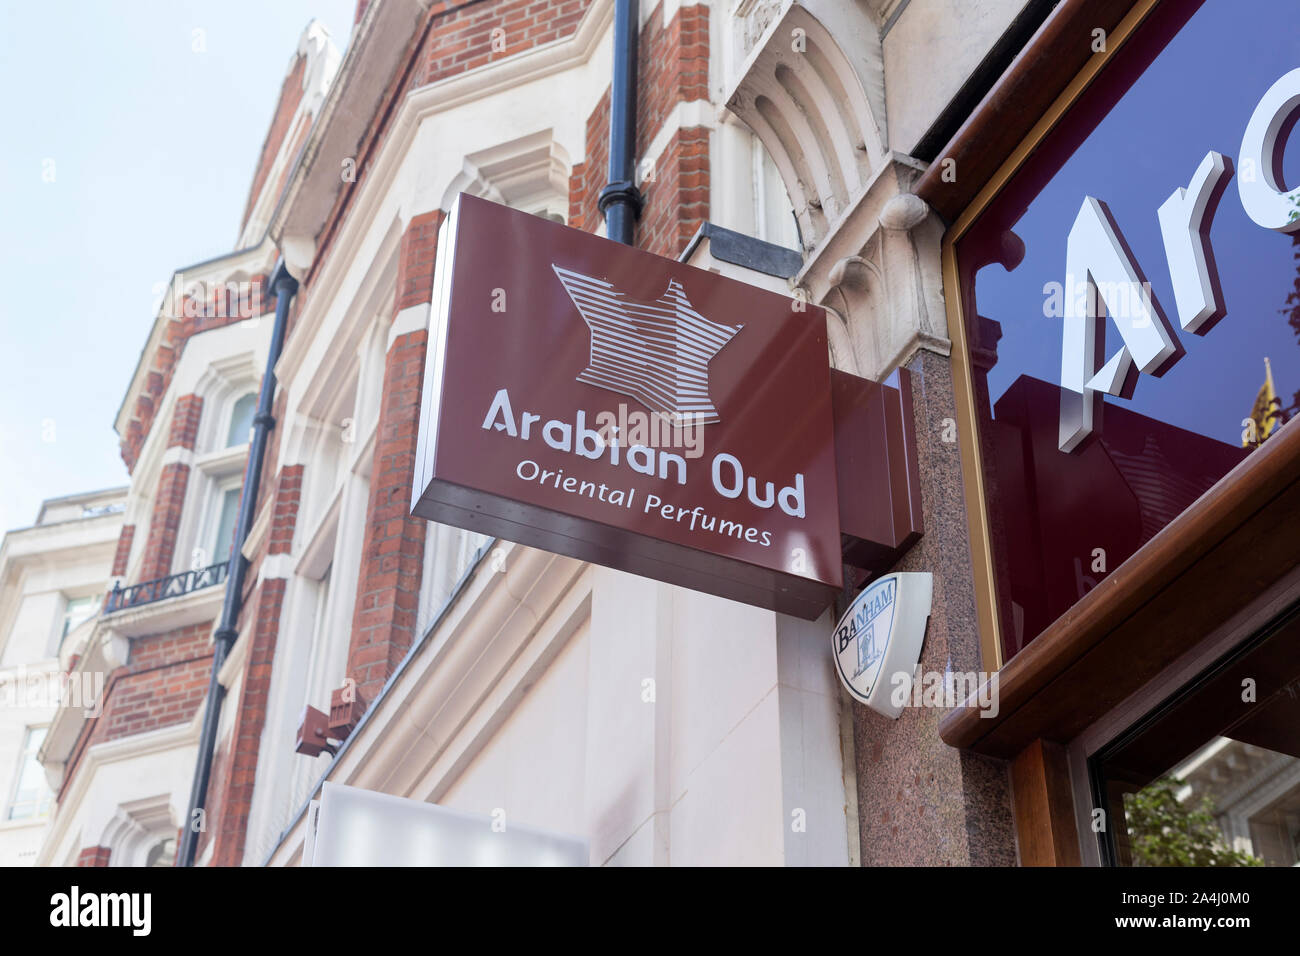 Arabian Oud sign logo, London, England Stock Photo